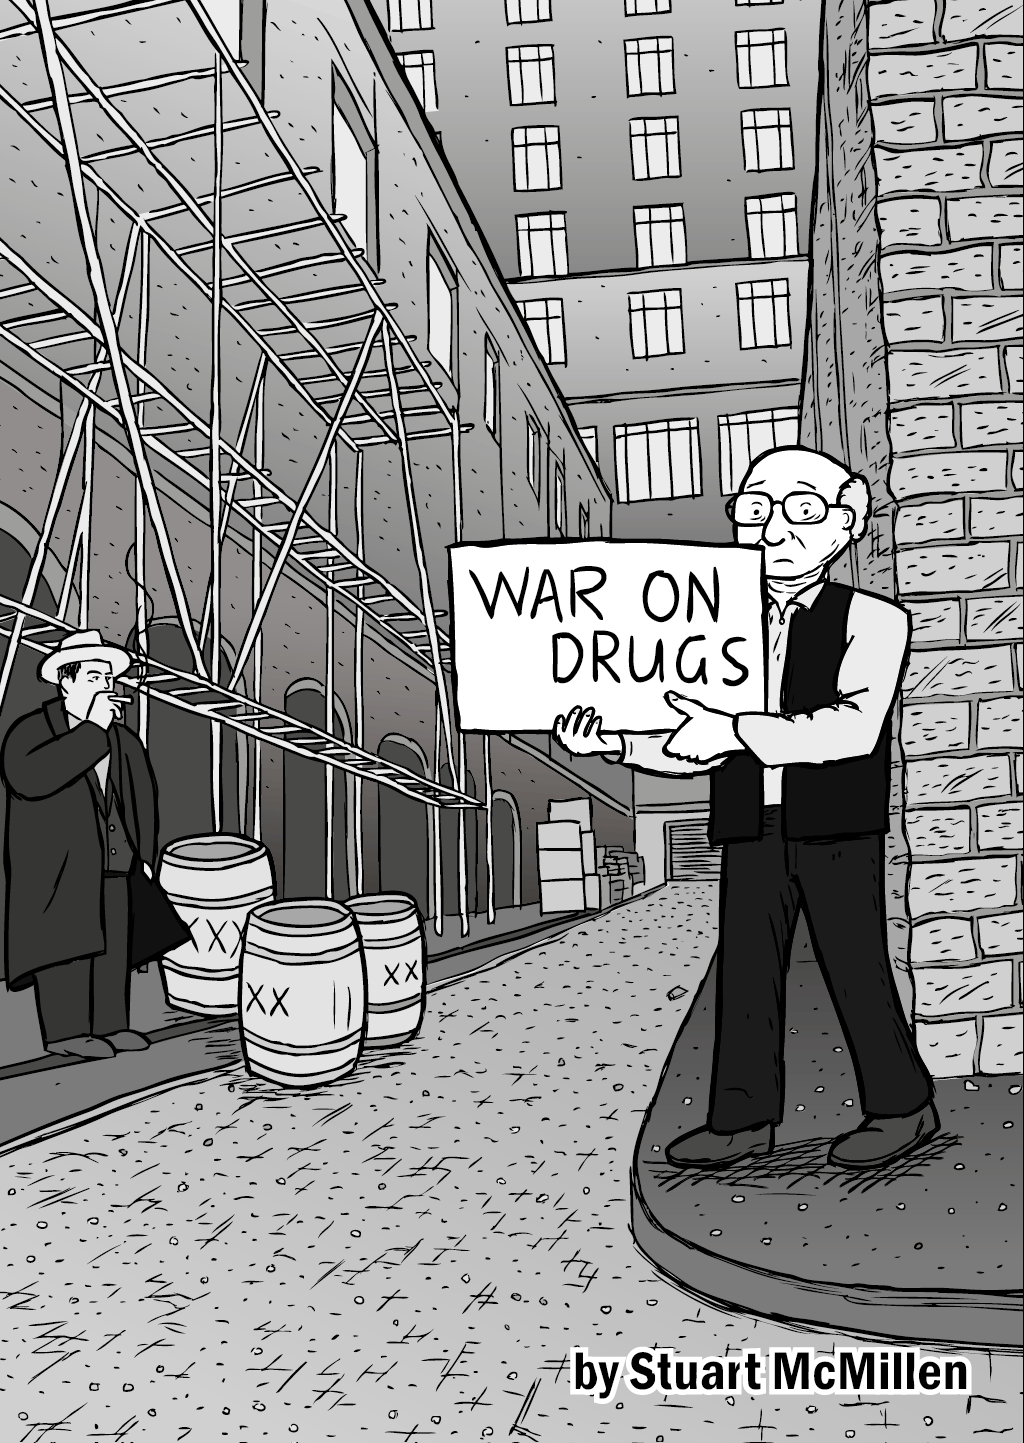 War on Drugs comic book cover artwork